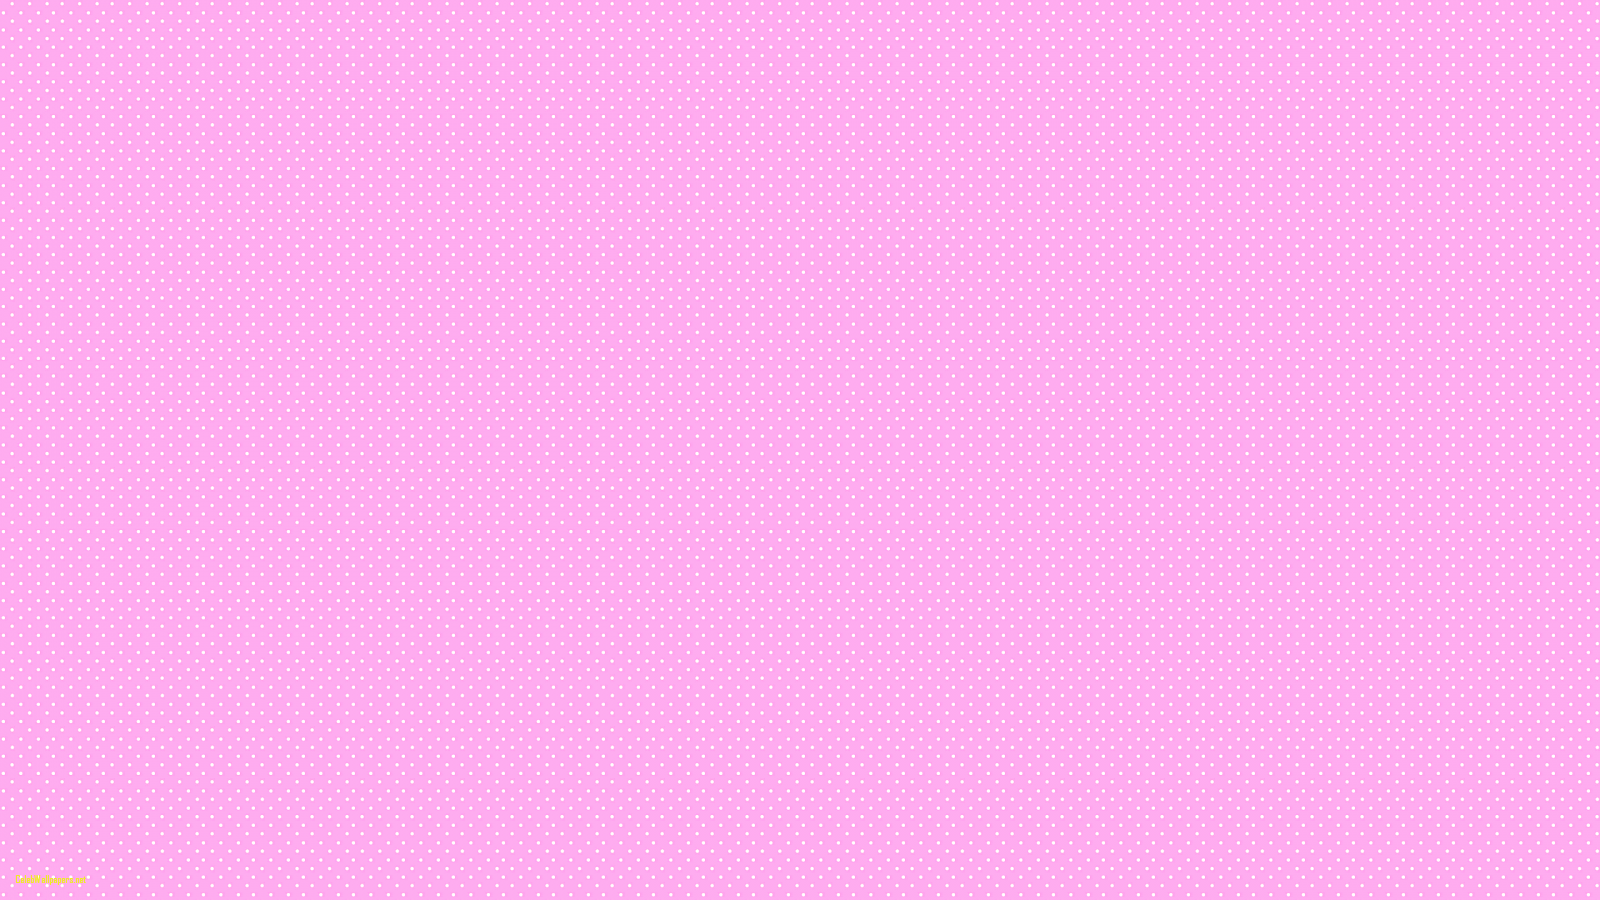 Background Wallpaper Tumblr Plain Pink Wallpaper Awesome Plain Pink